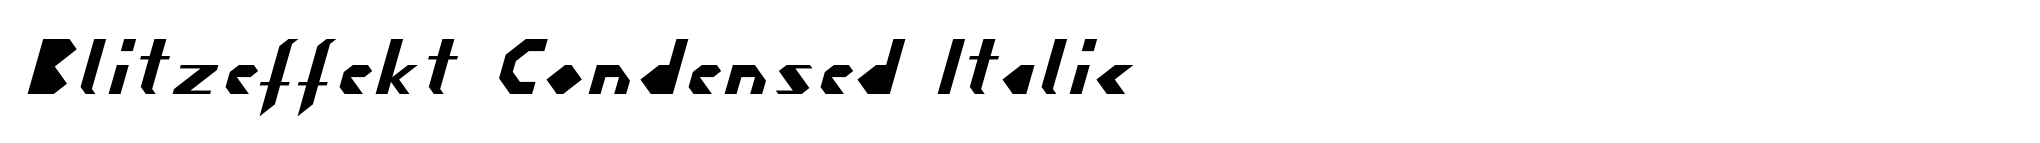 Blitzeffekt Condensed Italic image